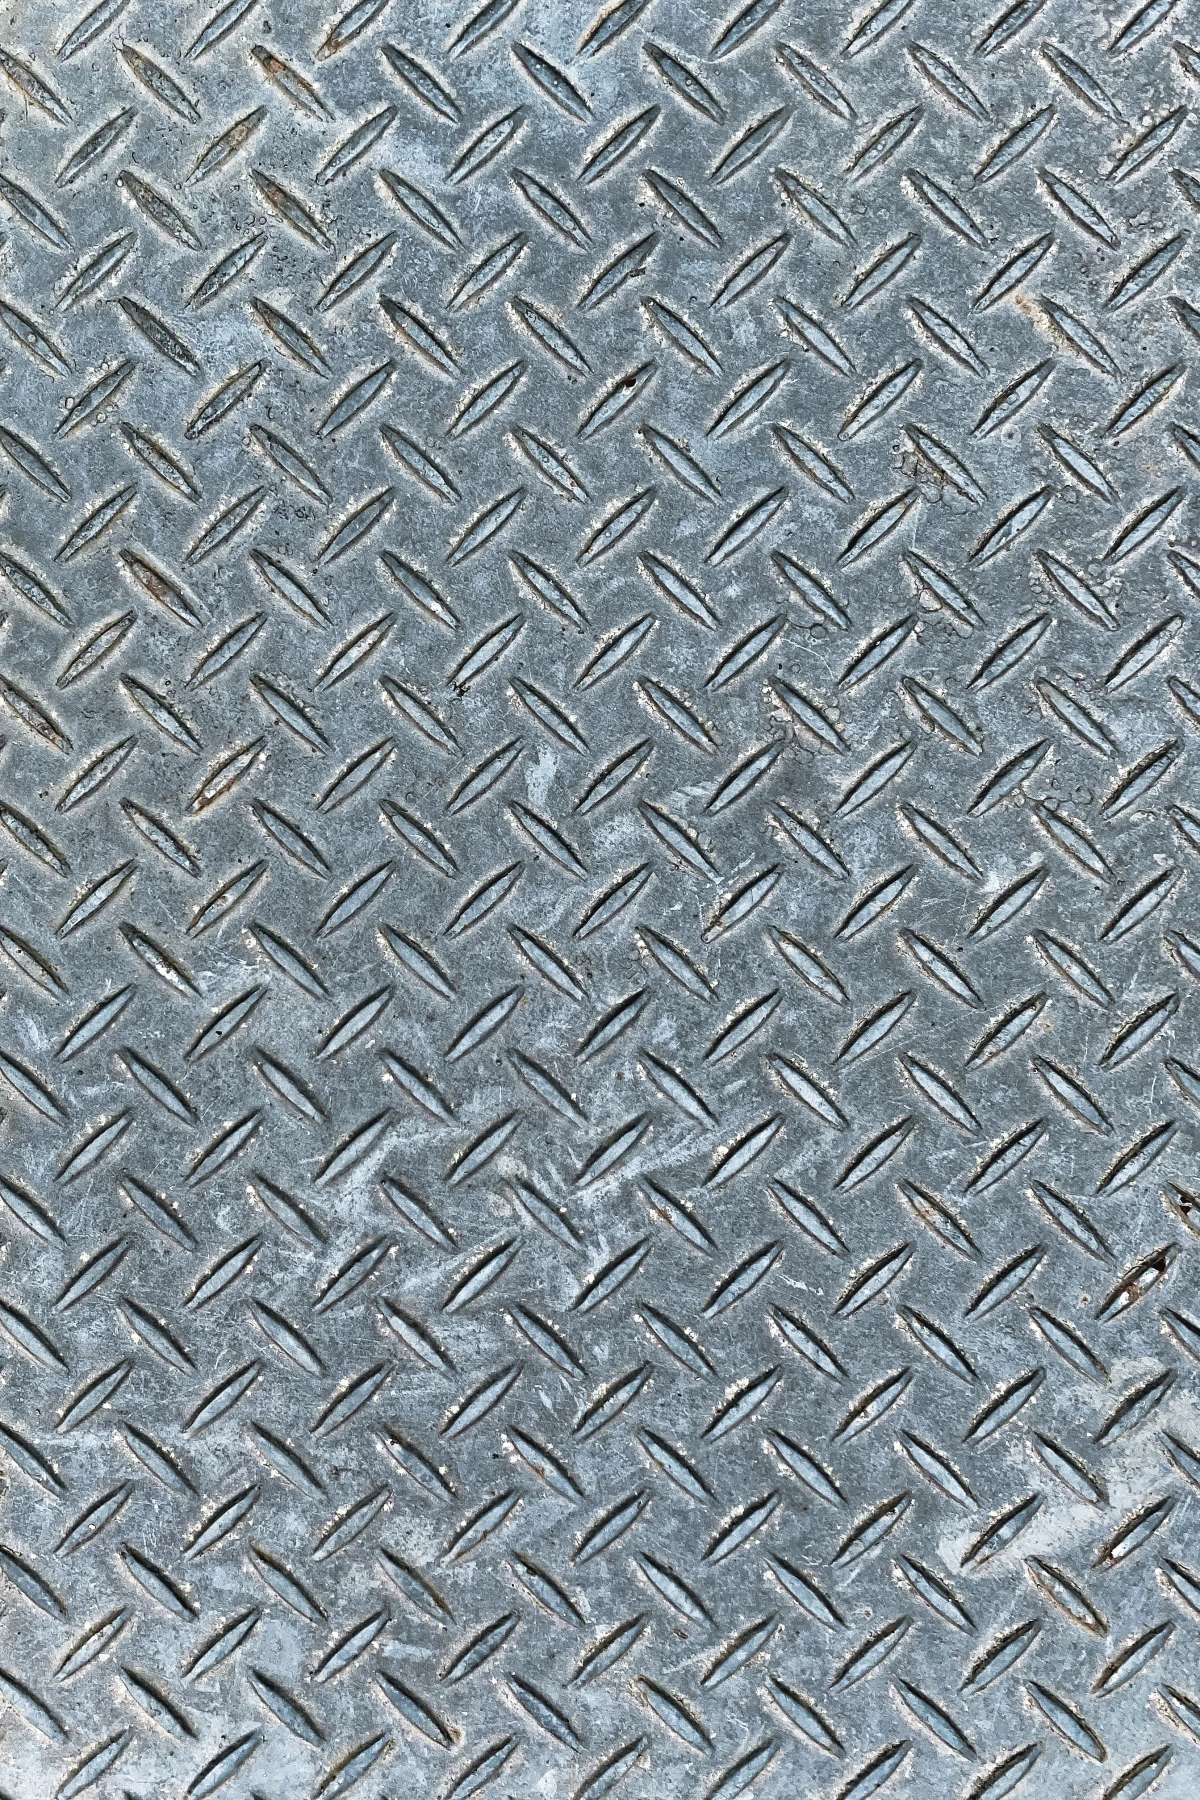 steel plate with criss cross pattern